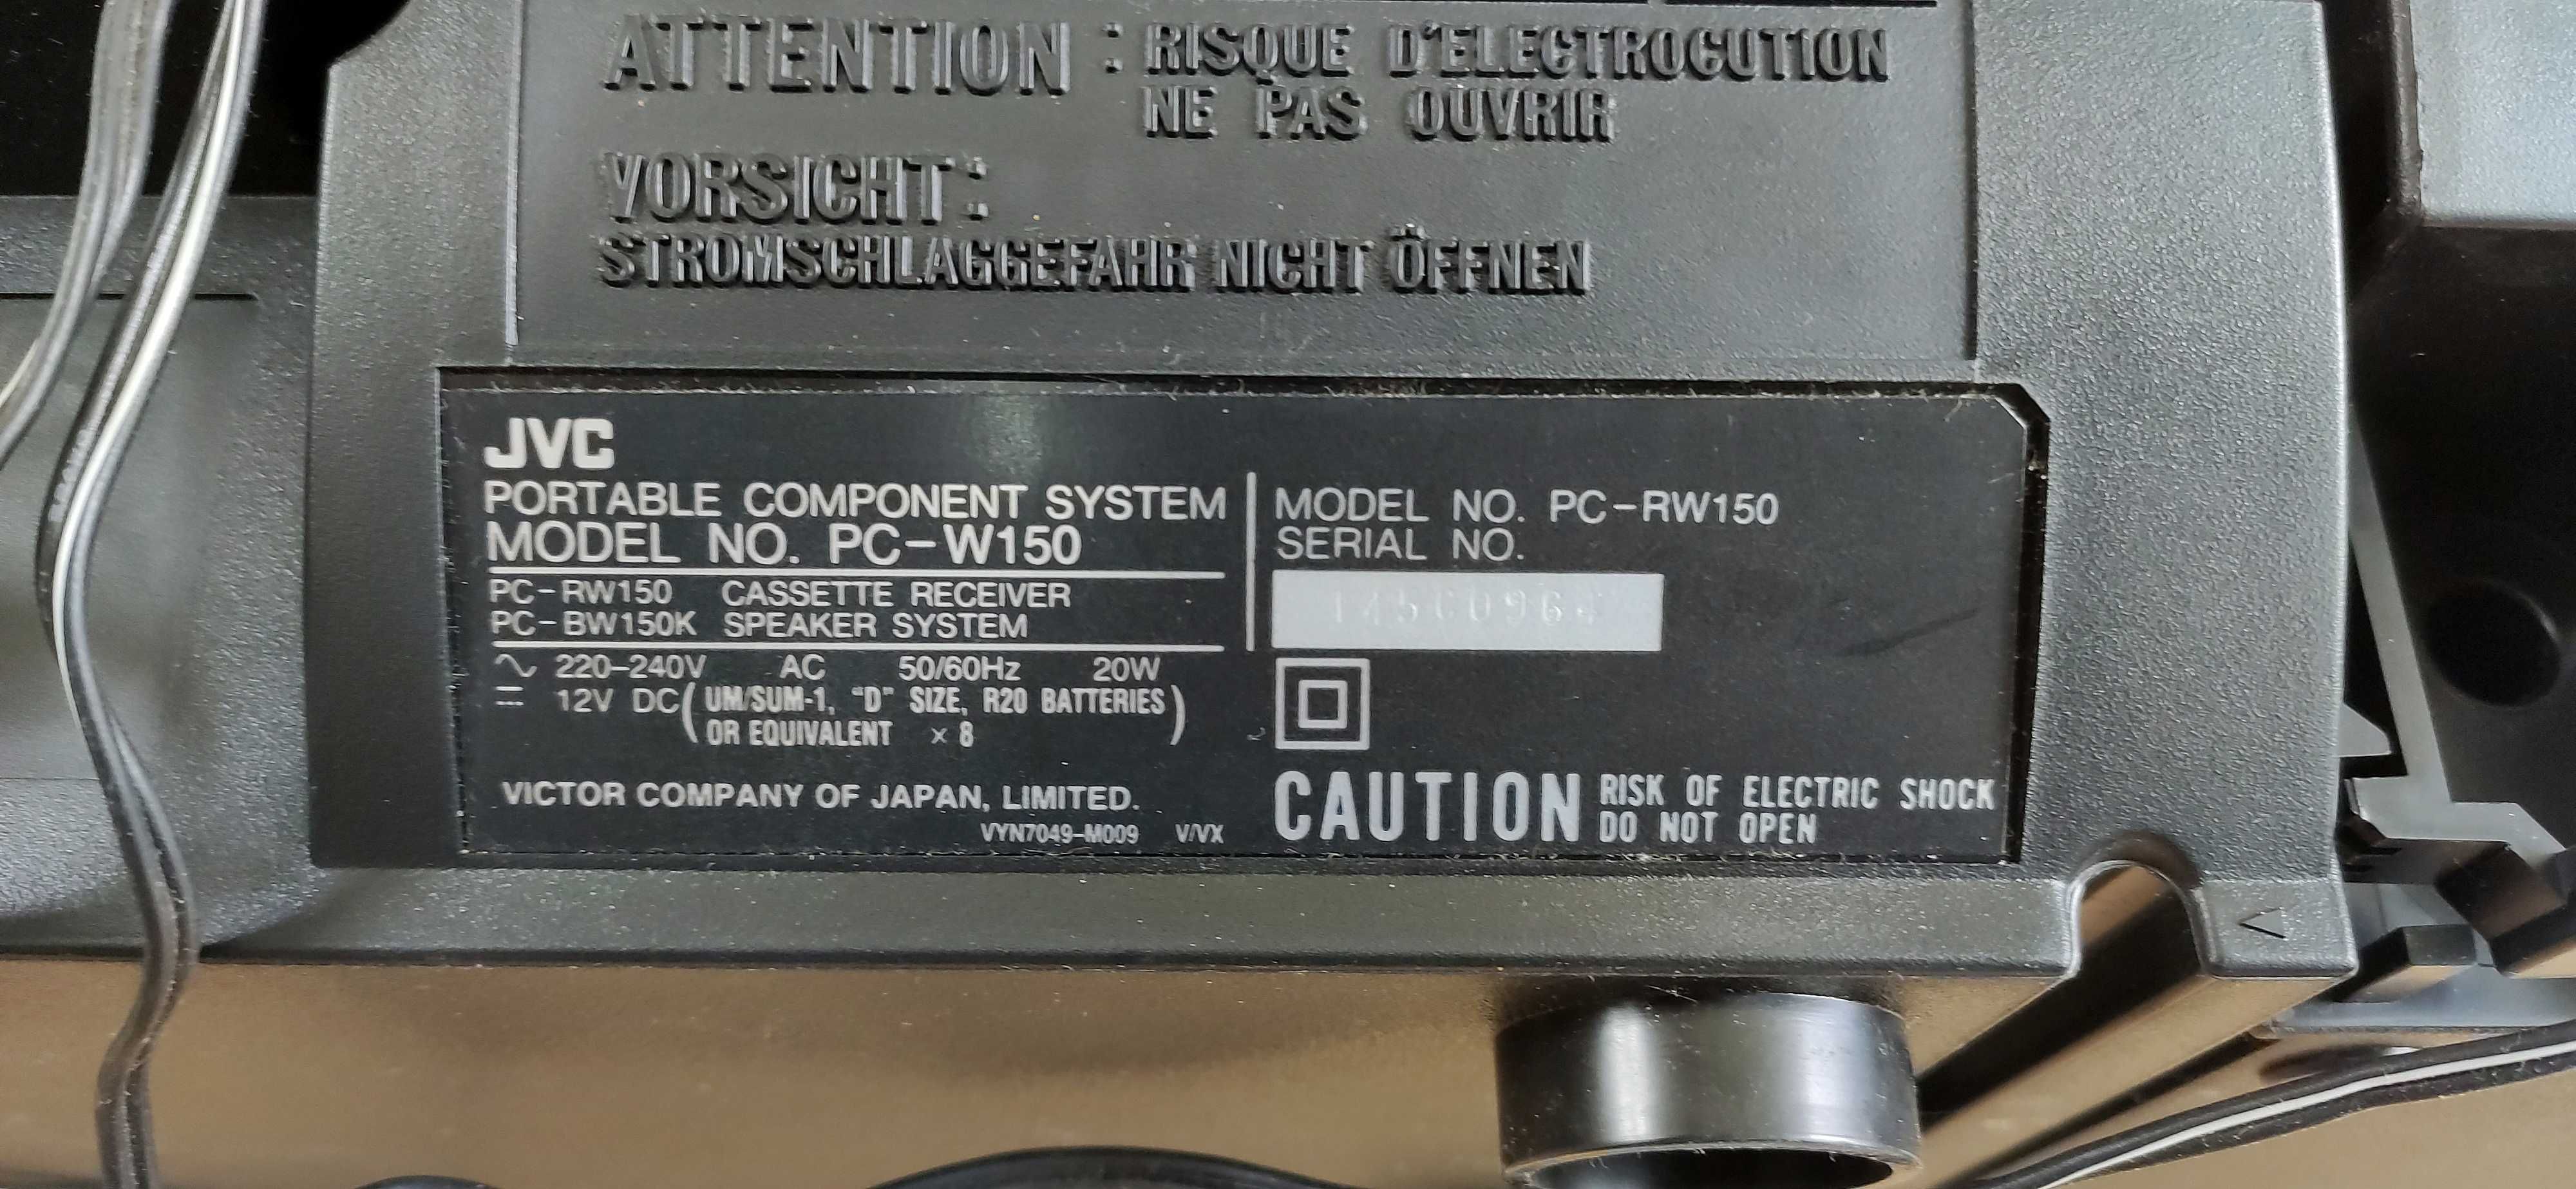 Двухкассетная магнитола JVC PC-W150